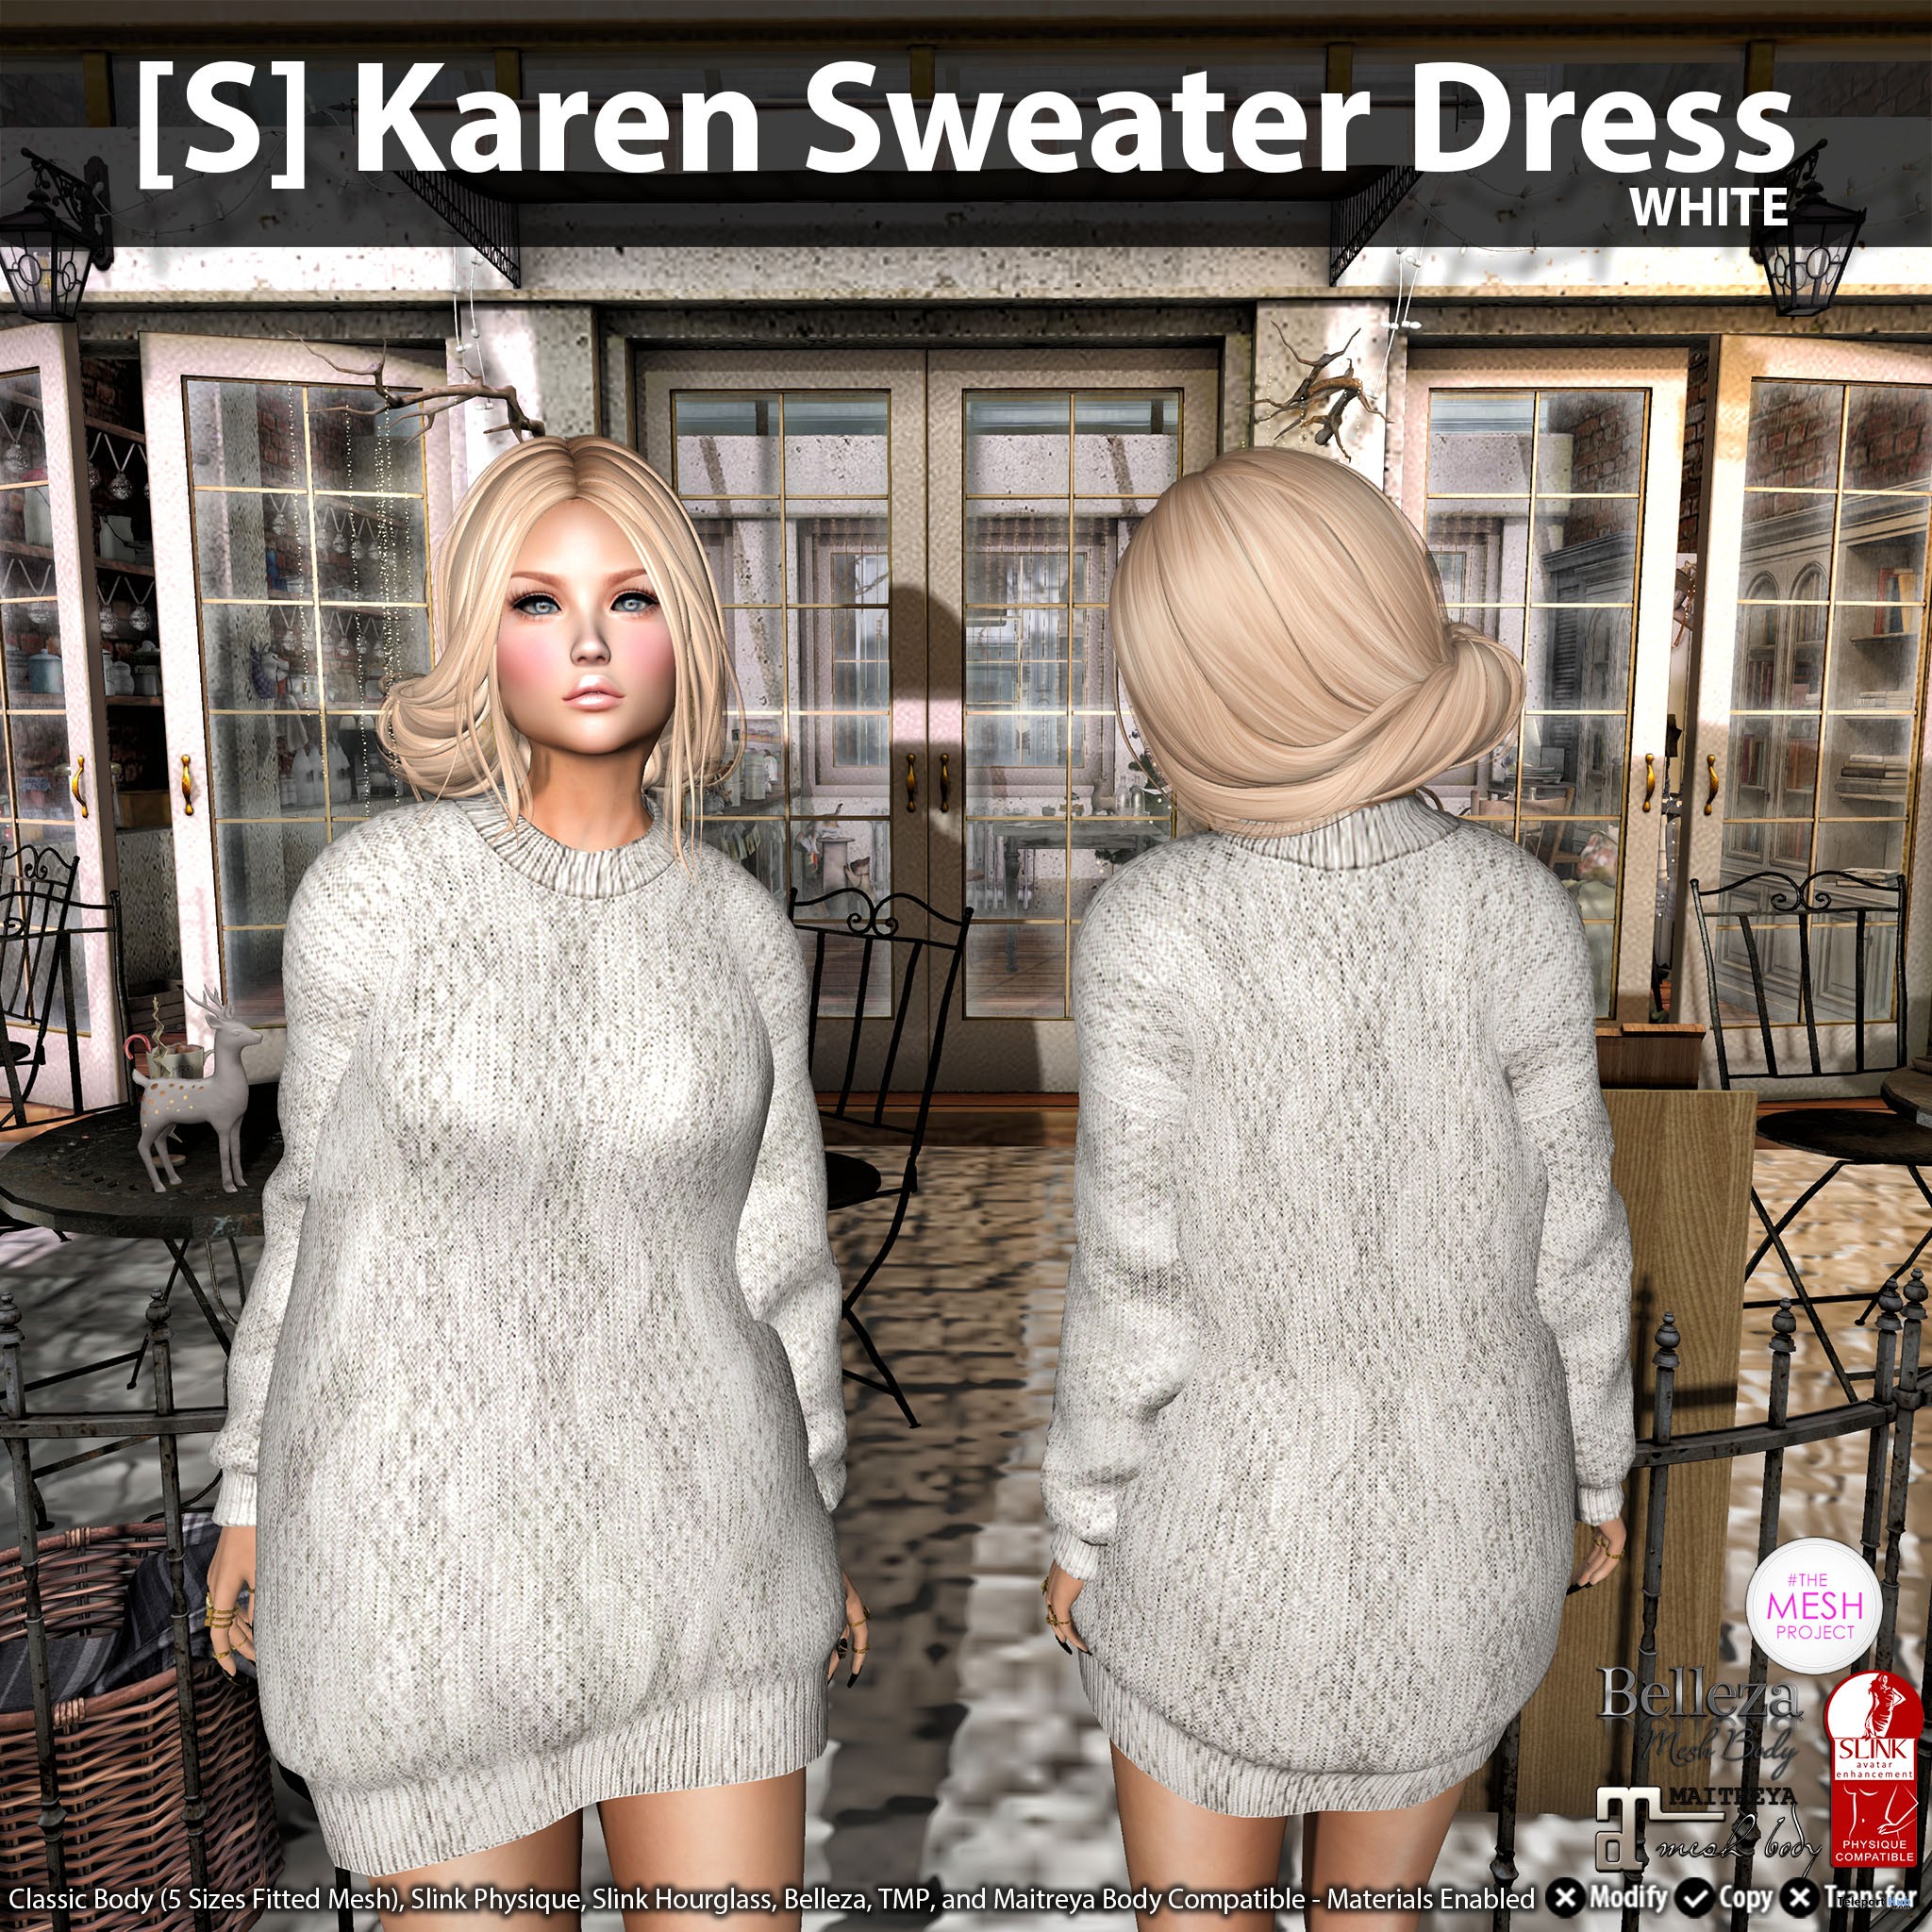 New Release: [S] Karen Sweater Dress by [satus Inc] - Teleport Hub - teleporthub.com